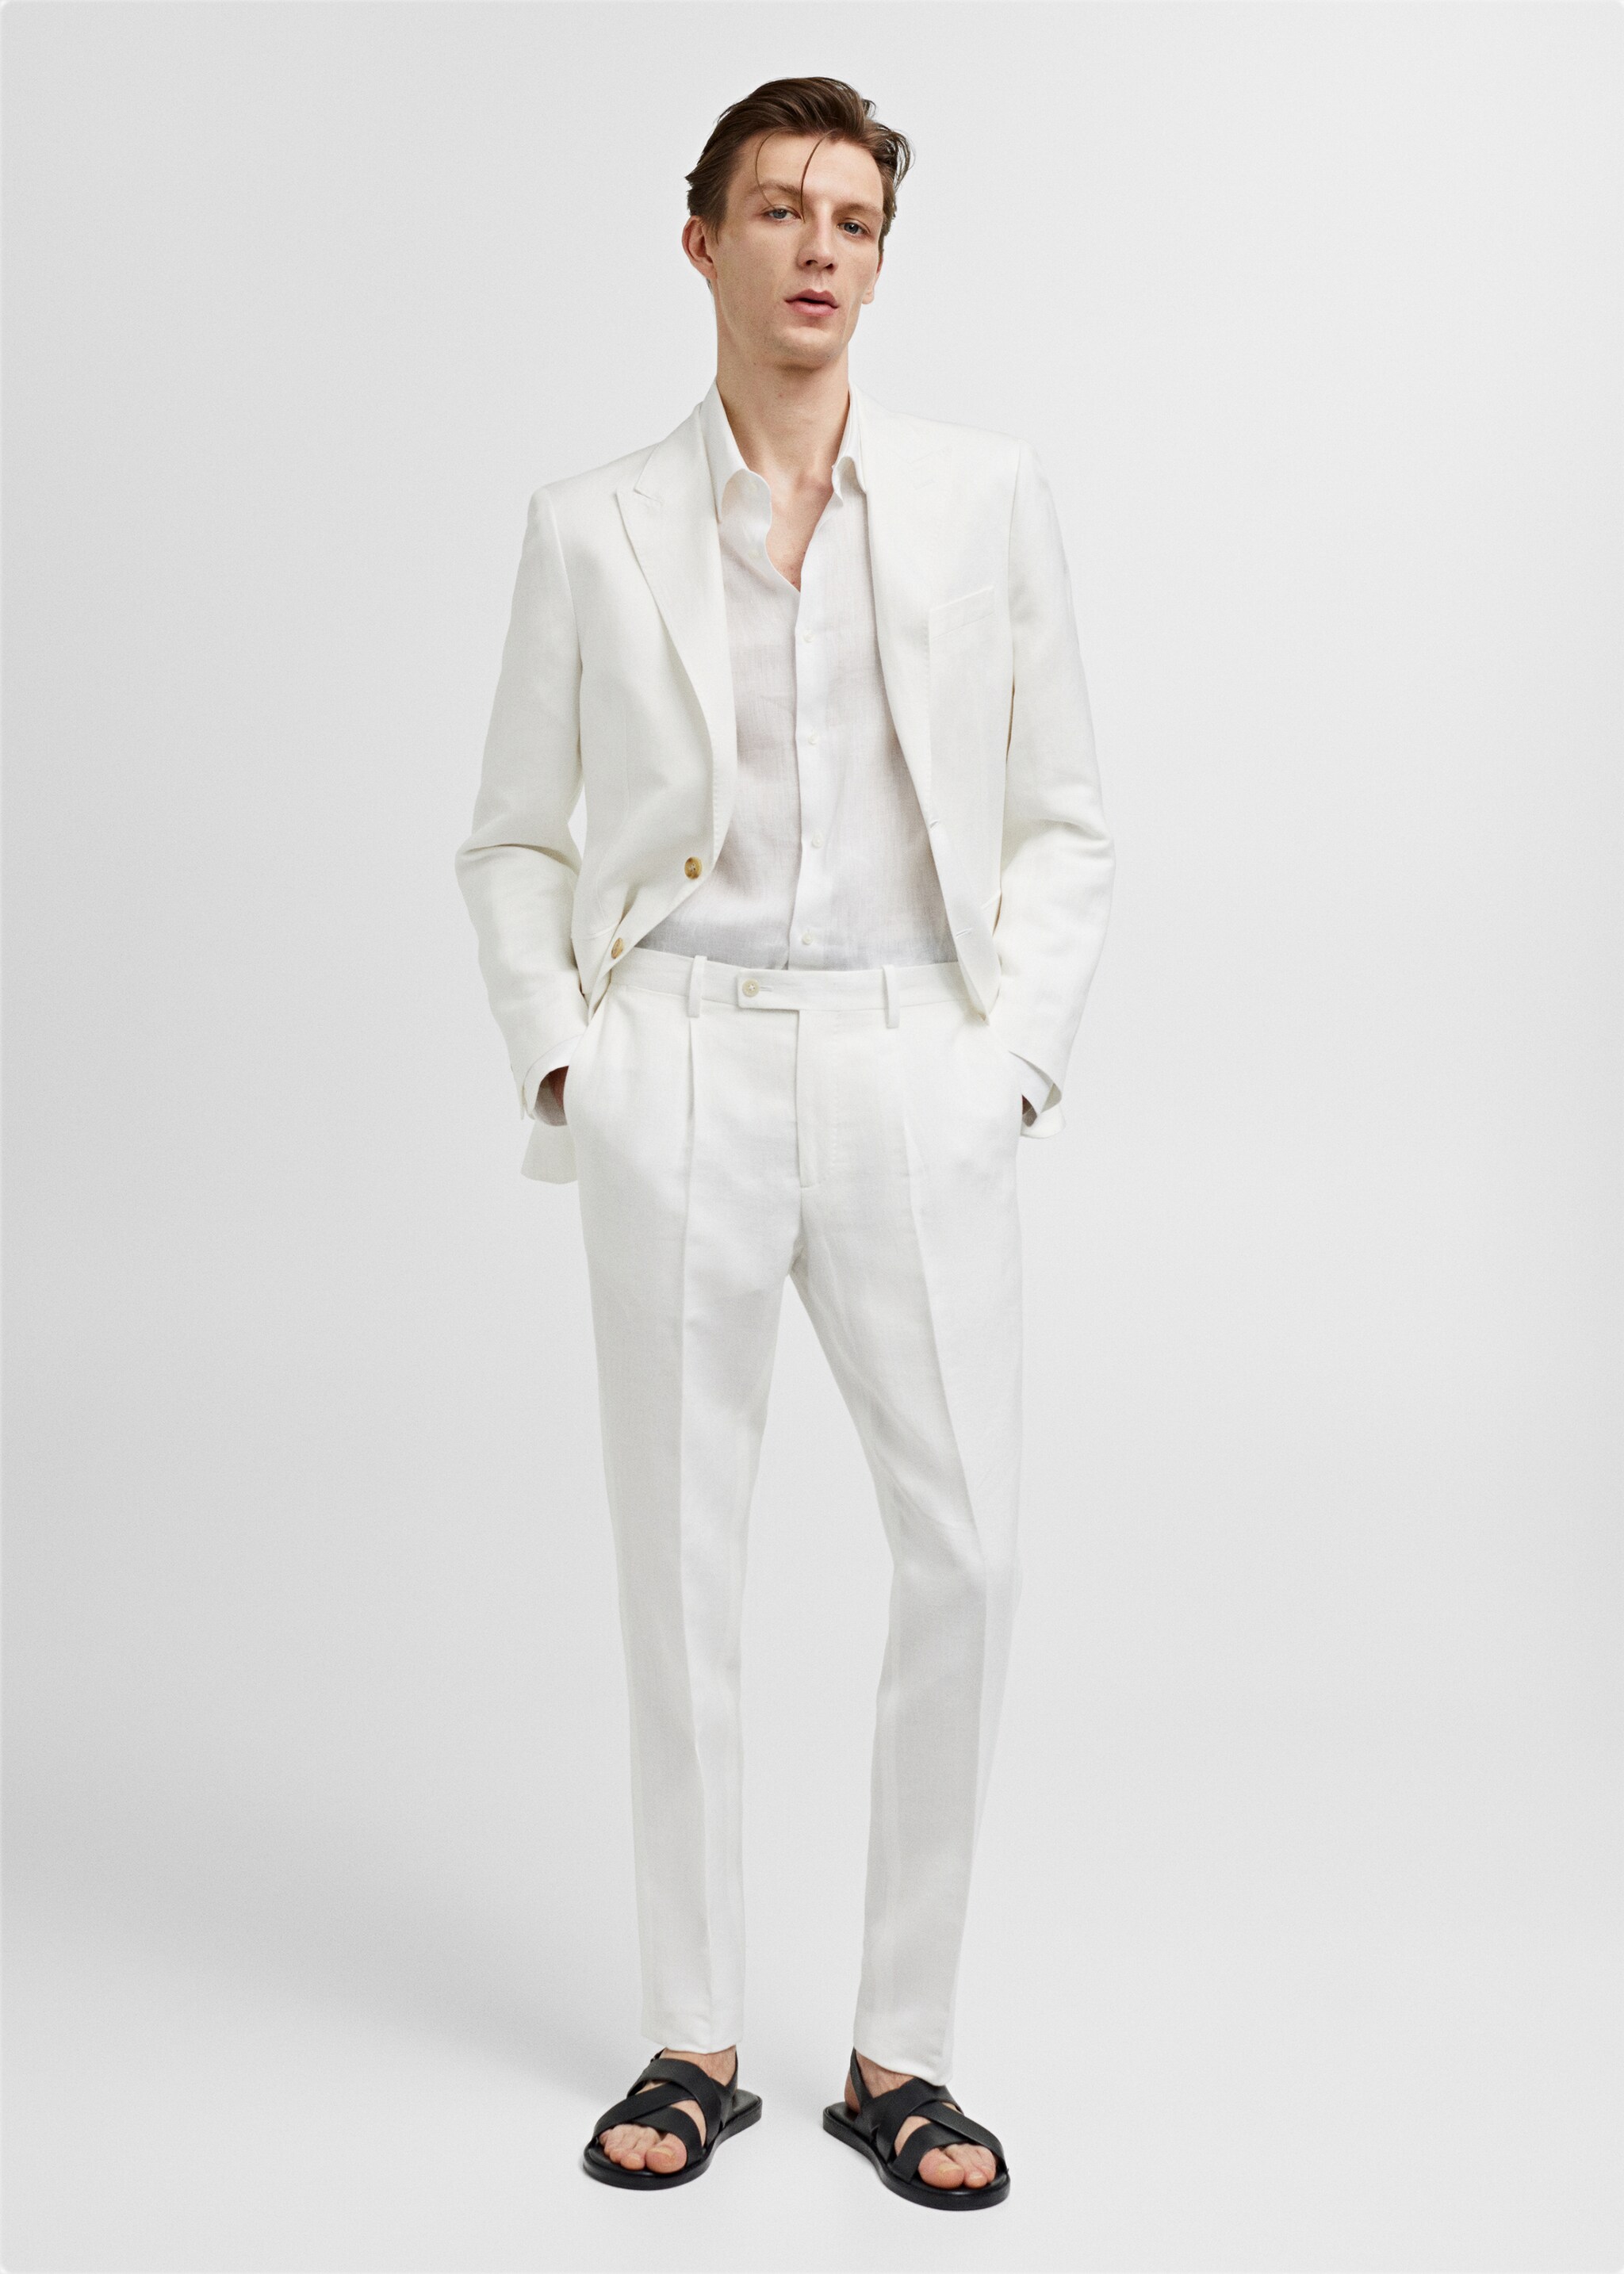 Pantalón traje slim fit algodón lino - Plano general